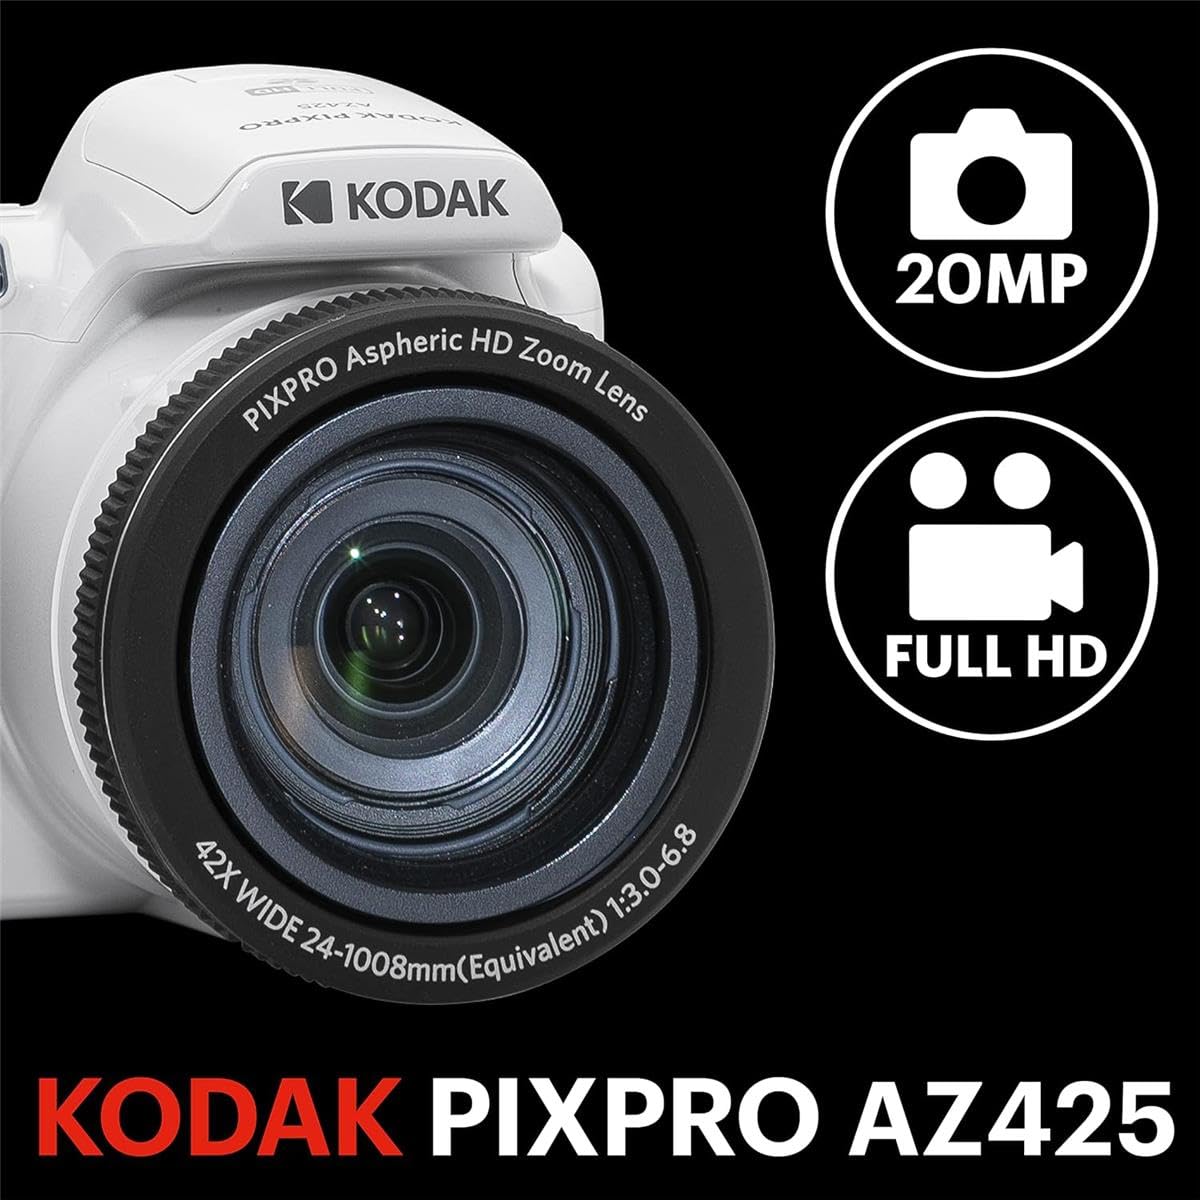 KODAK PIXPRO AZ425 Astro Zoom 20MP Full HD Digital Camera, White, Bundle with 32GB Memory Card and Camera Bag